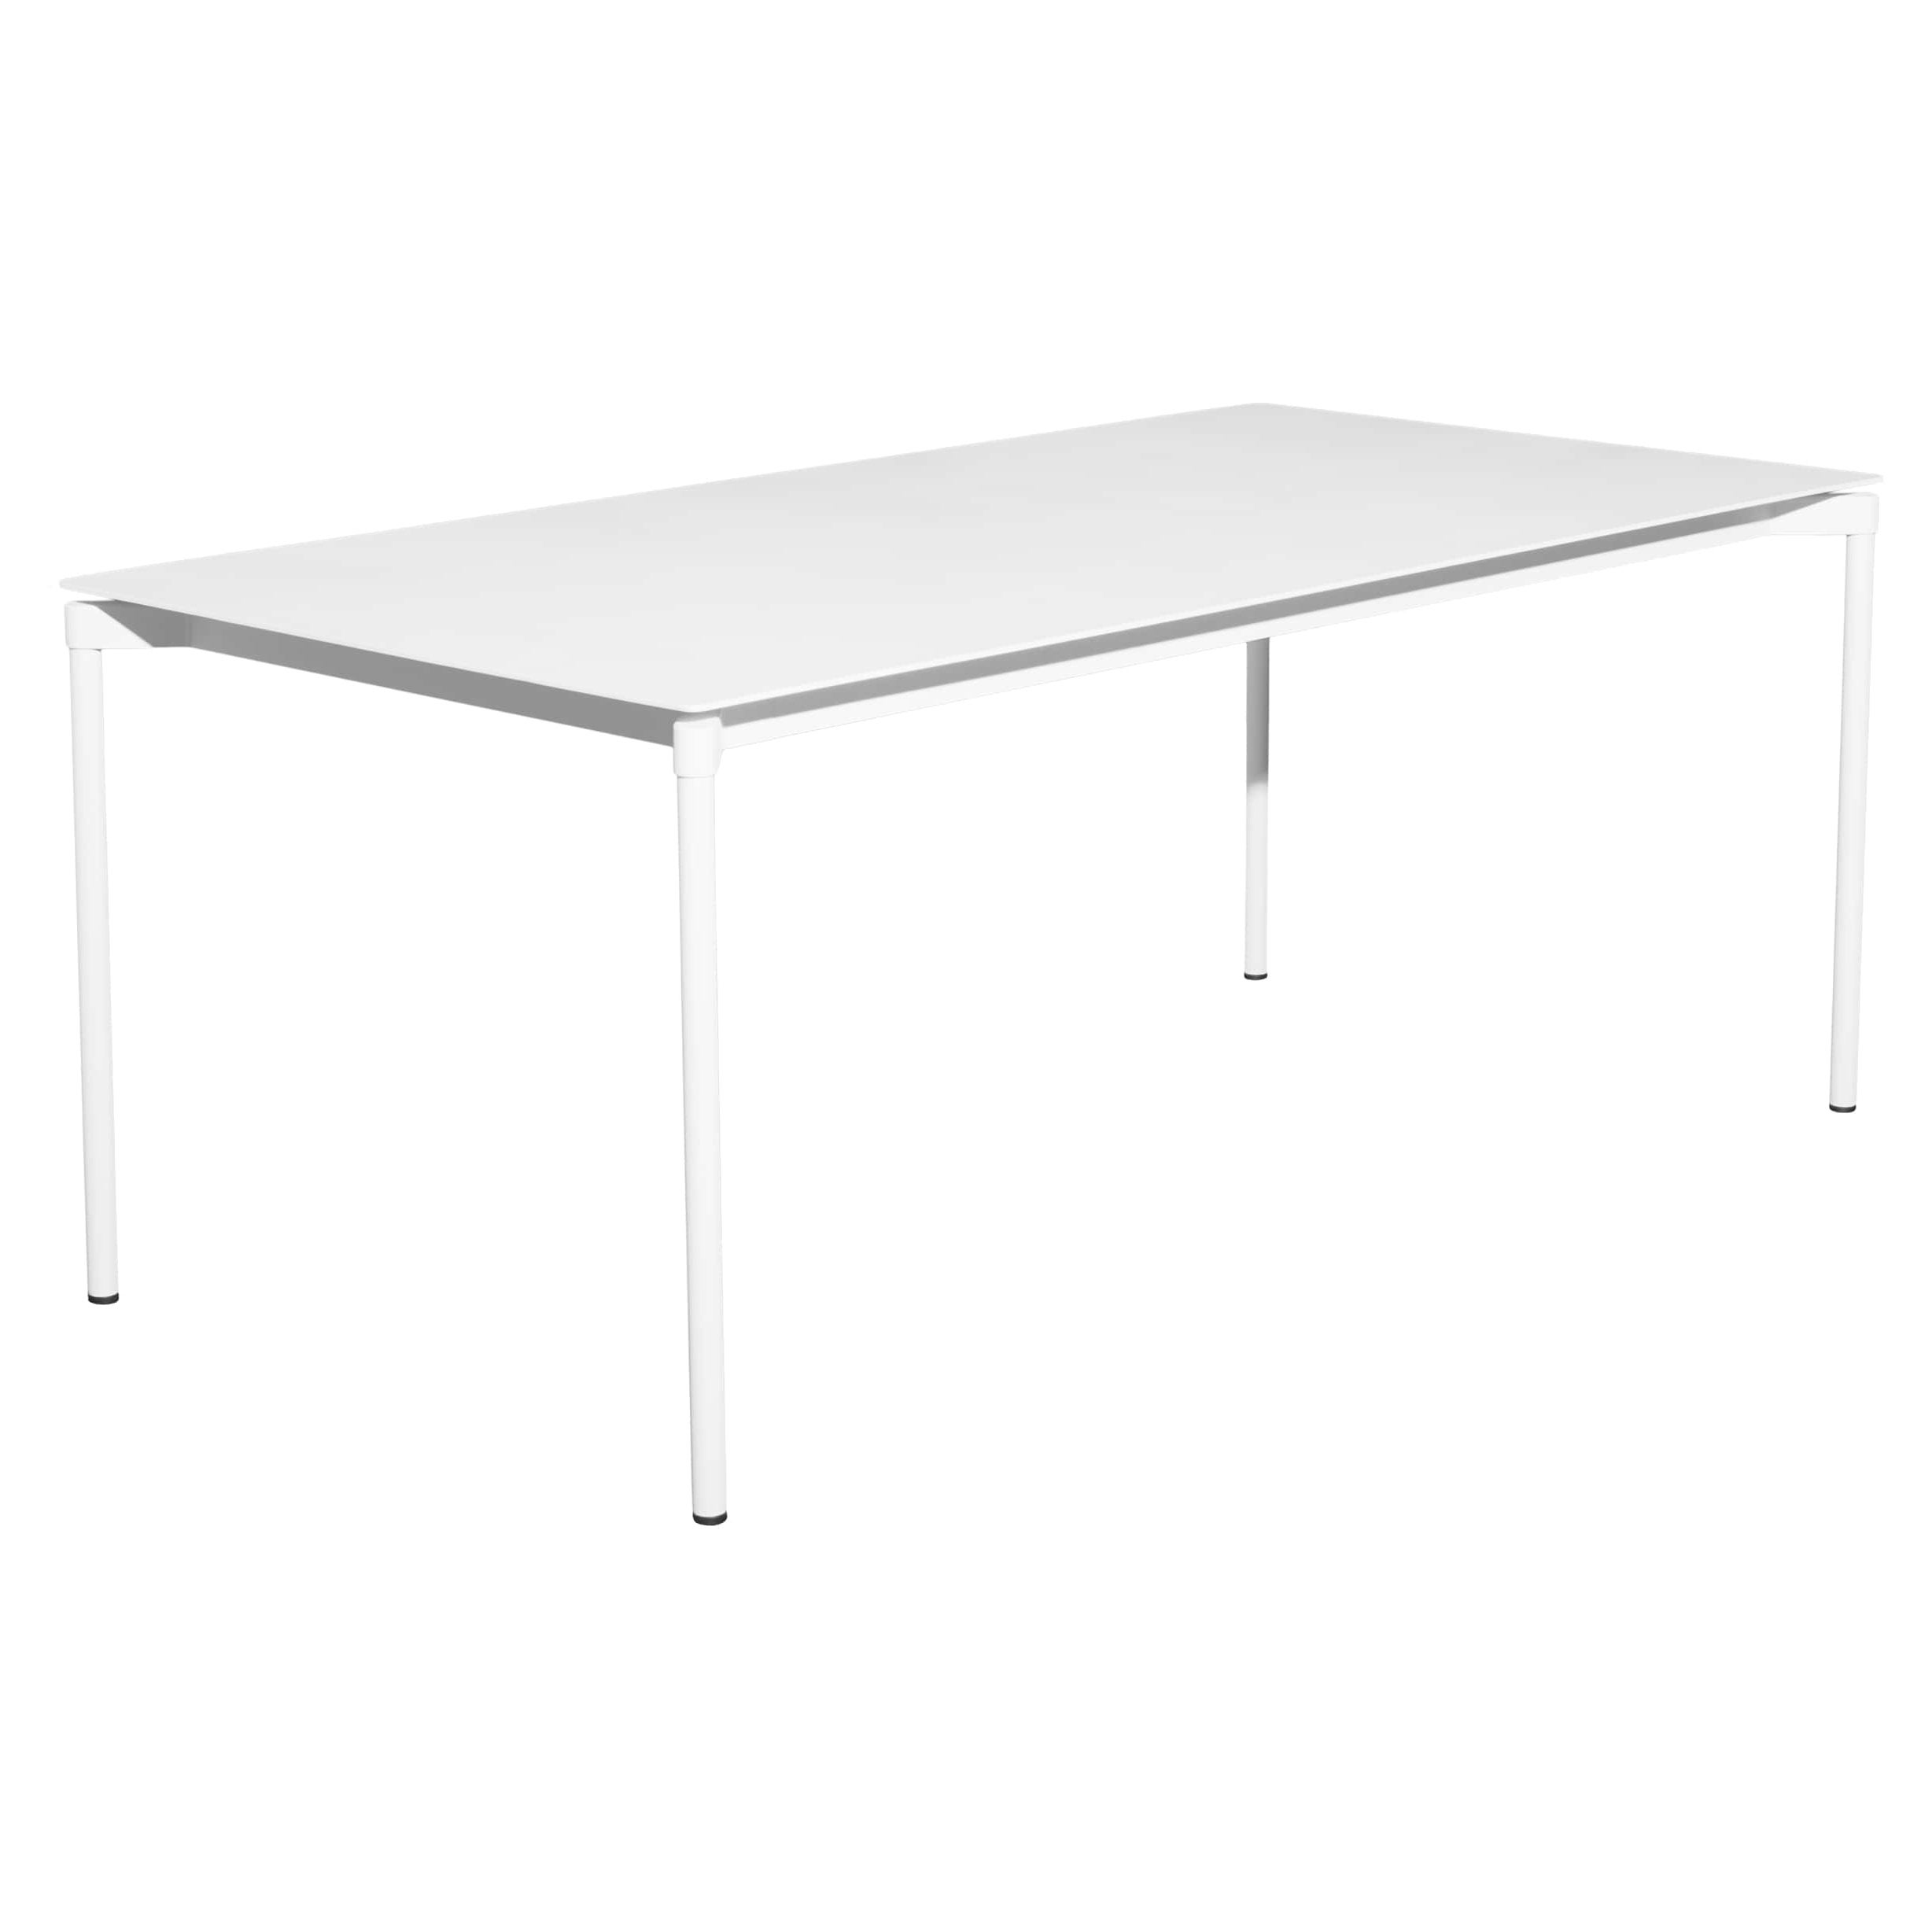 Petite table rectangulaire en aluminium blanc « Friture Fromme » de Tom Chung